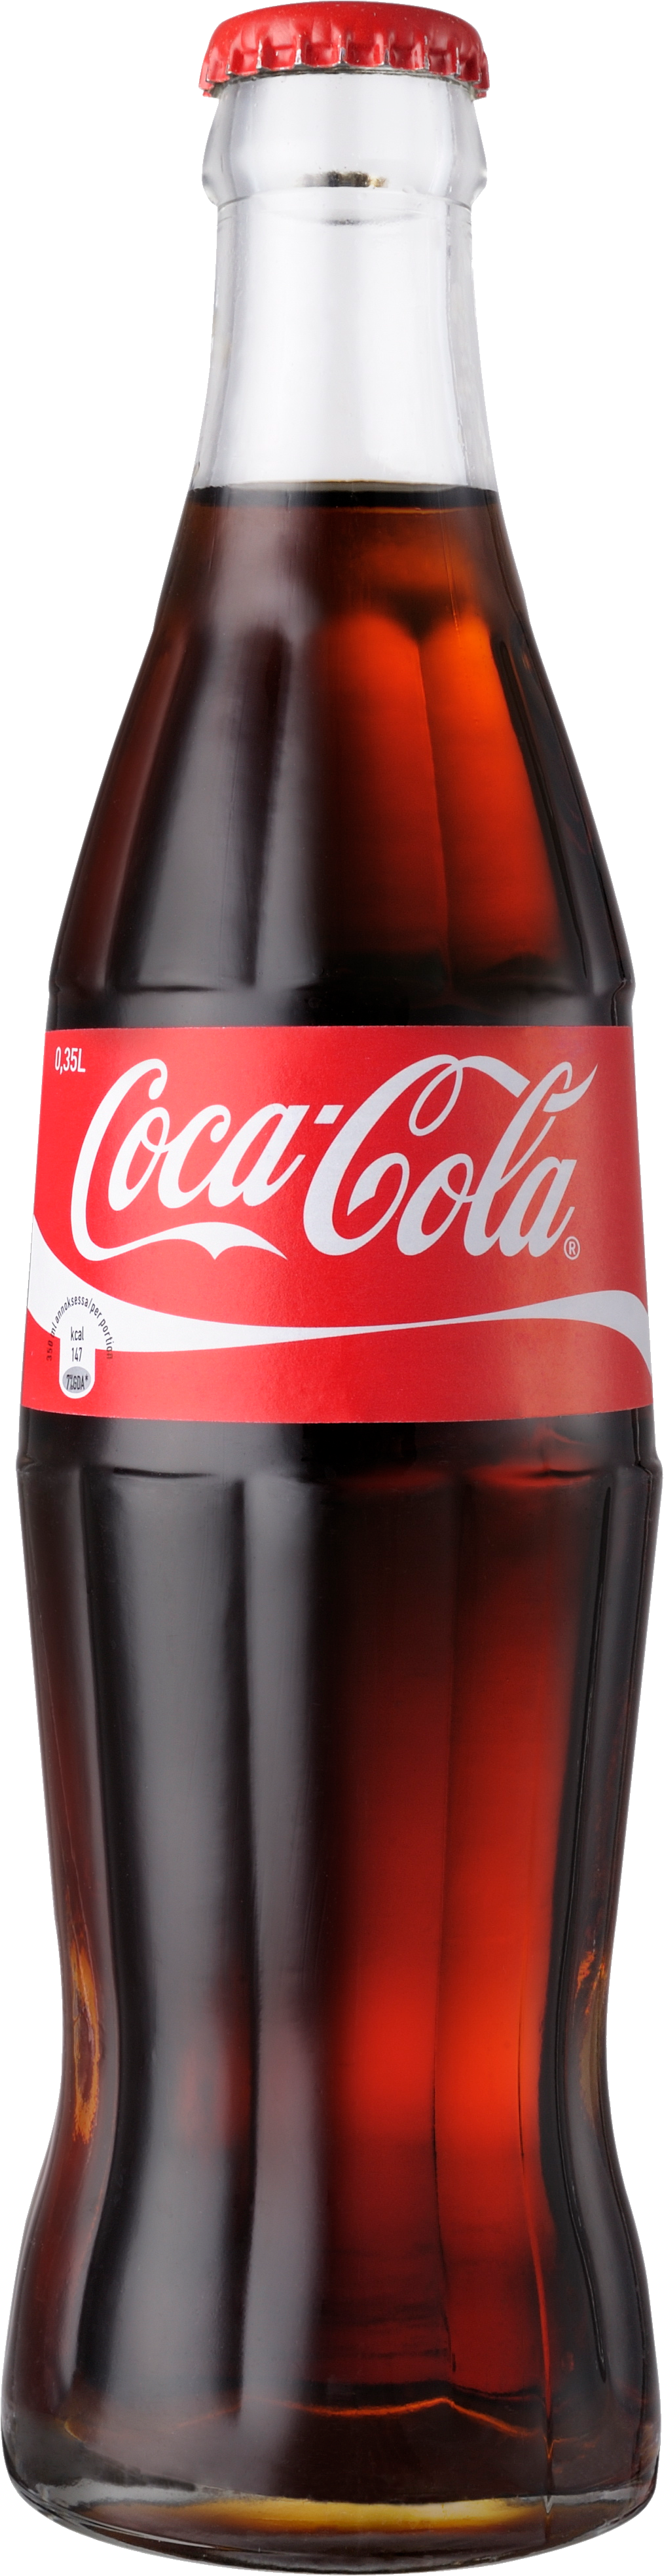 Coca Cola Bottle Png Image - Cola, Transparent background PNG HD thumbnail